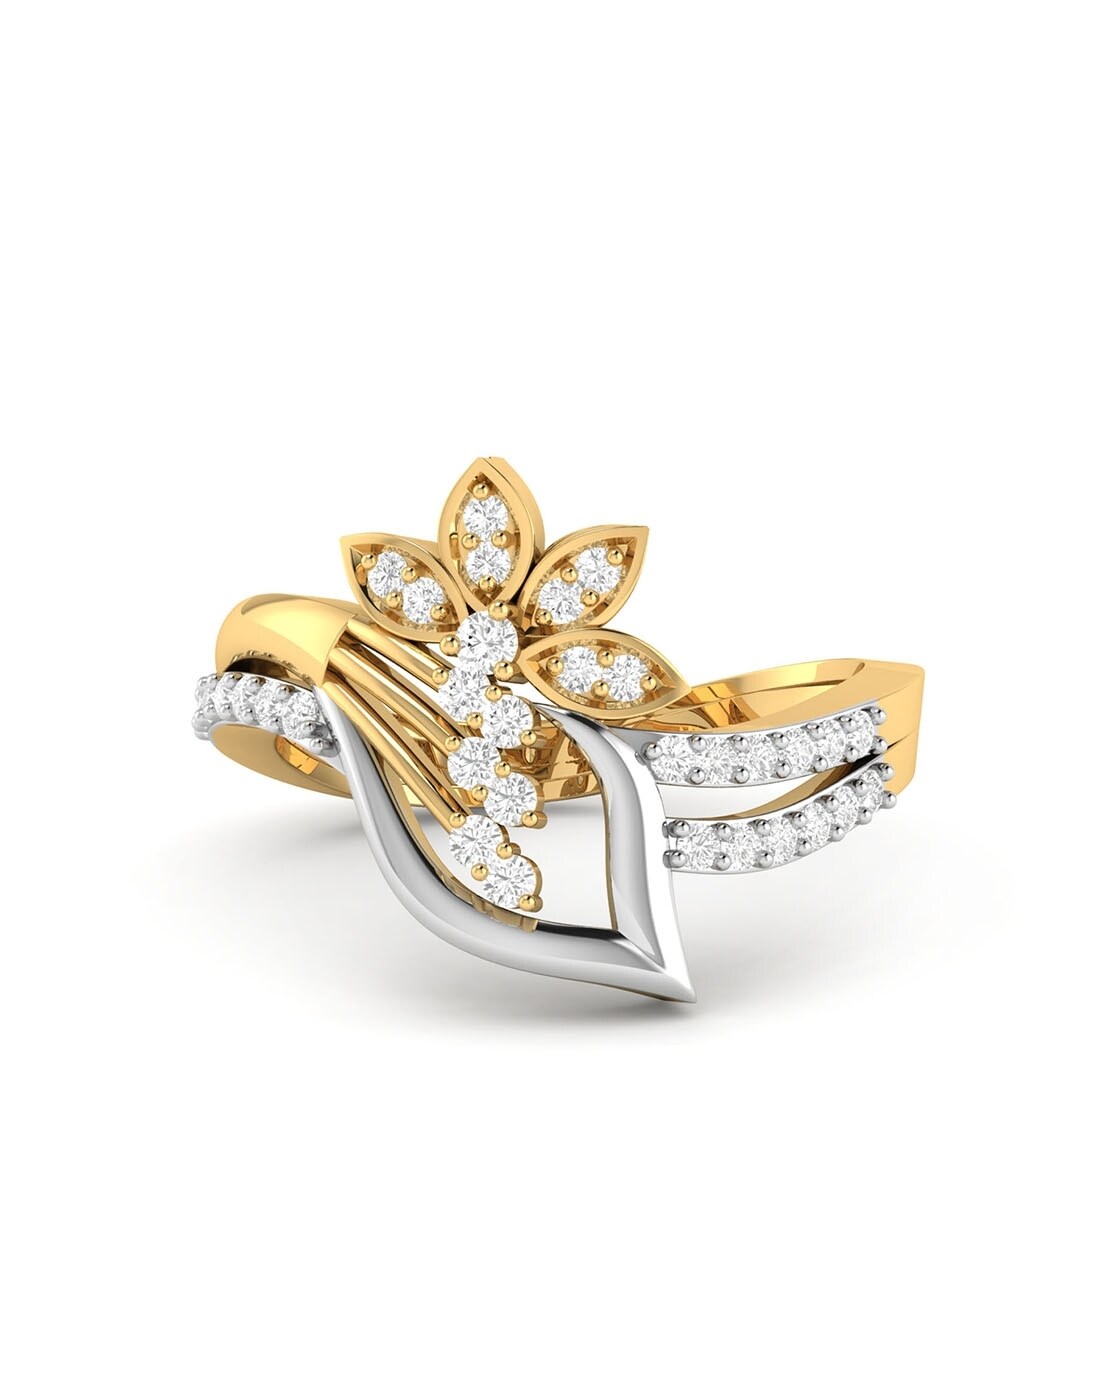 PC Jewellers Diamond Rings with Price (Womens Jewellery) - YouTube